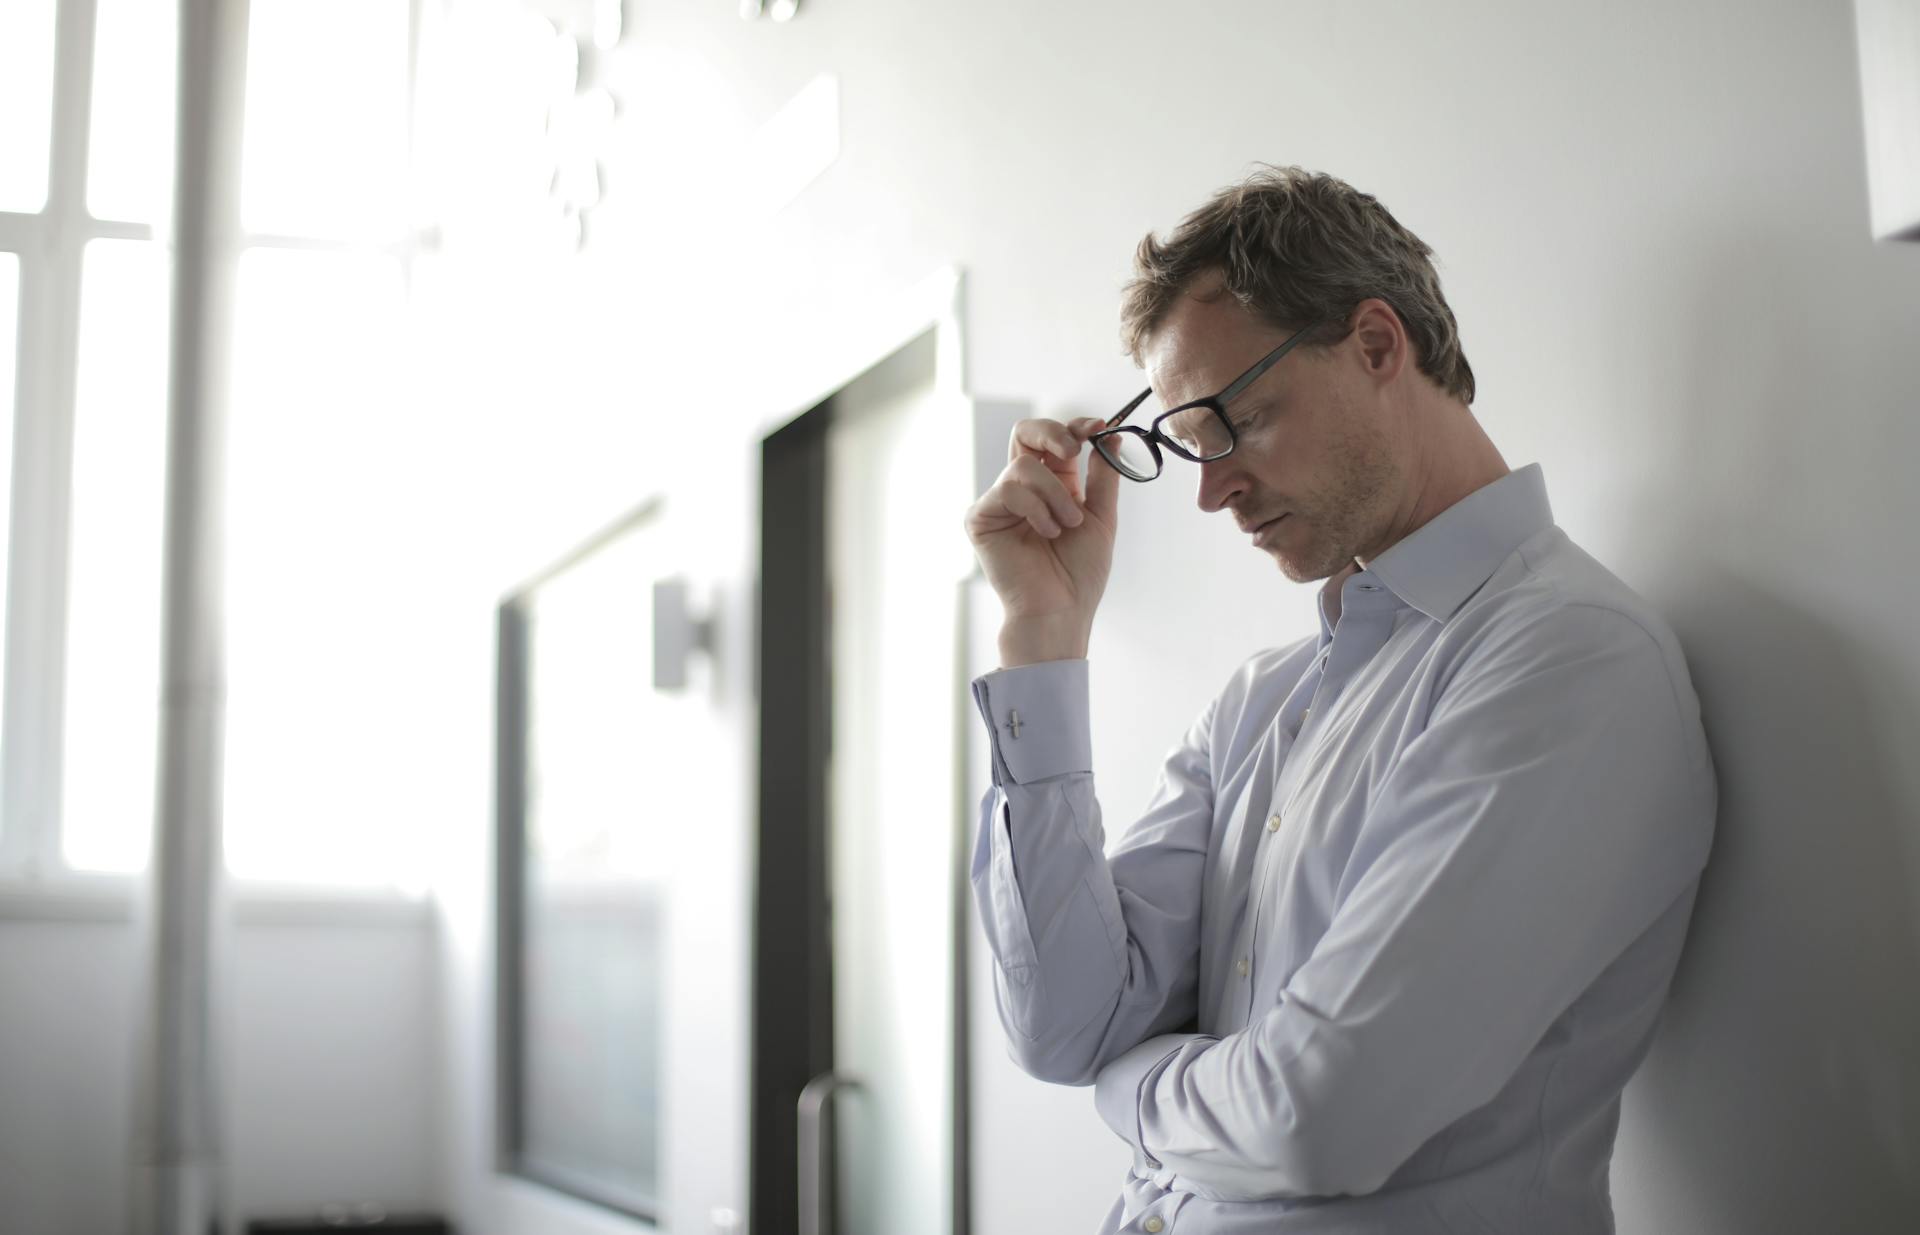 A photo of a man holding back eyeglasses | Source: Pexels